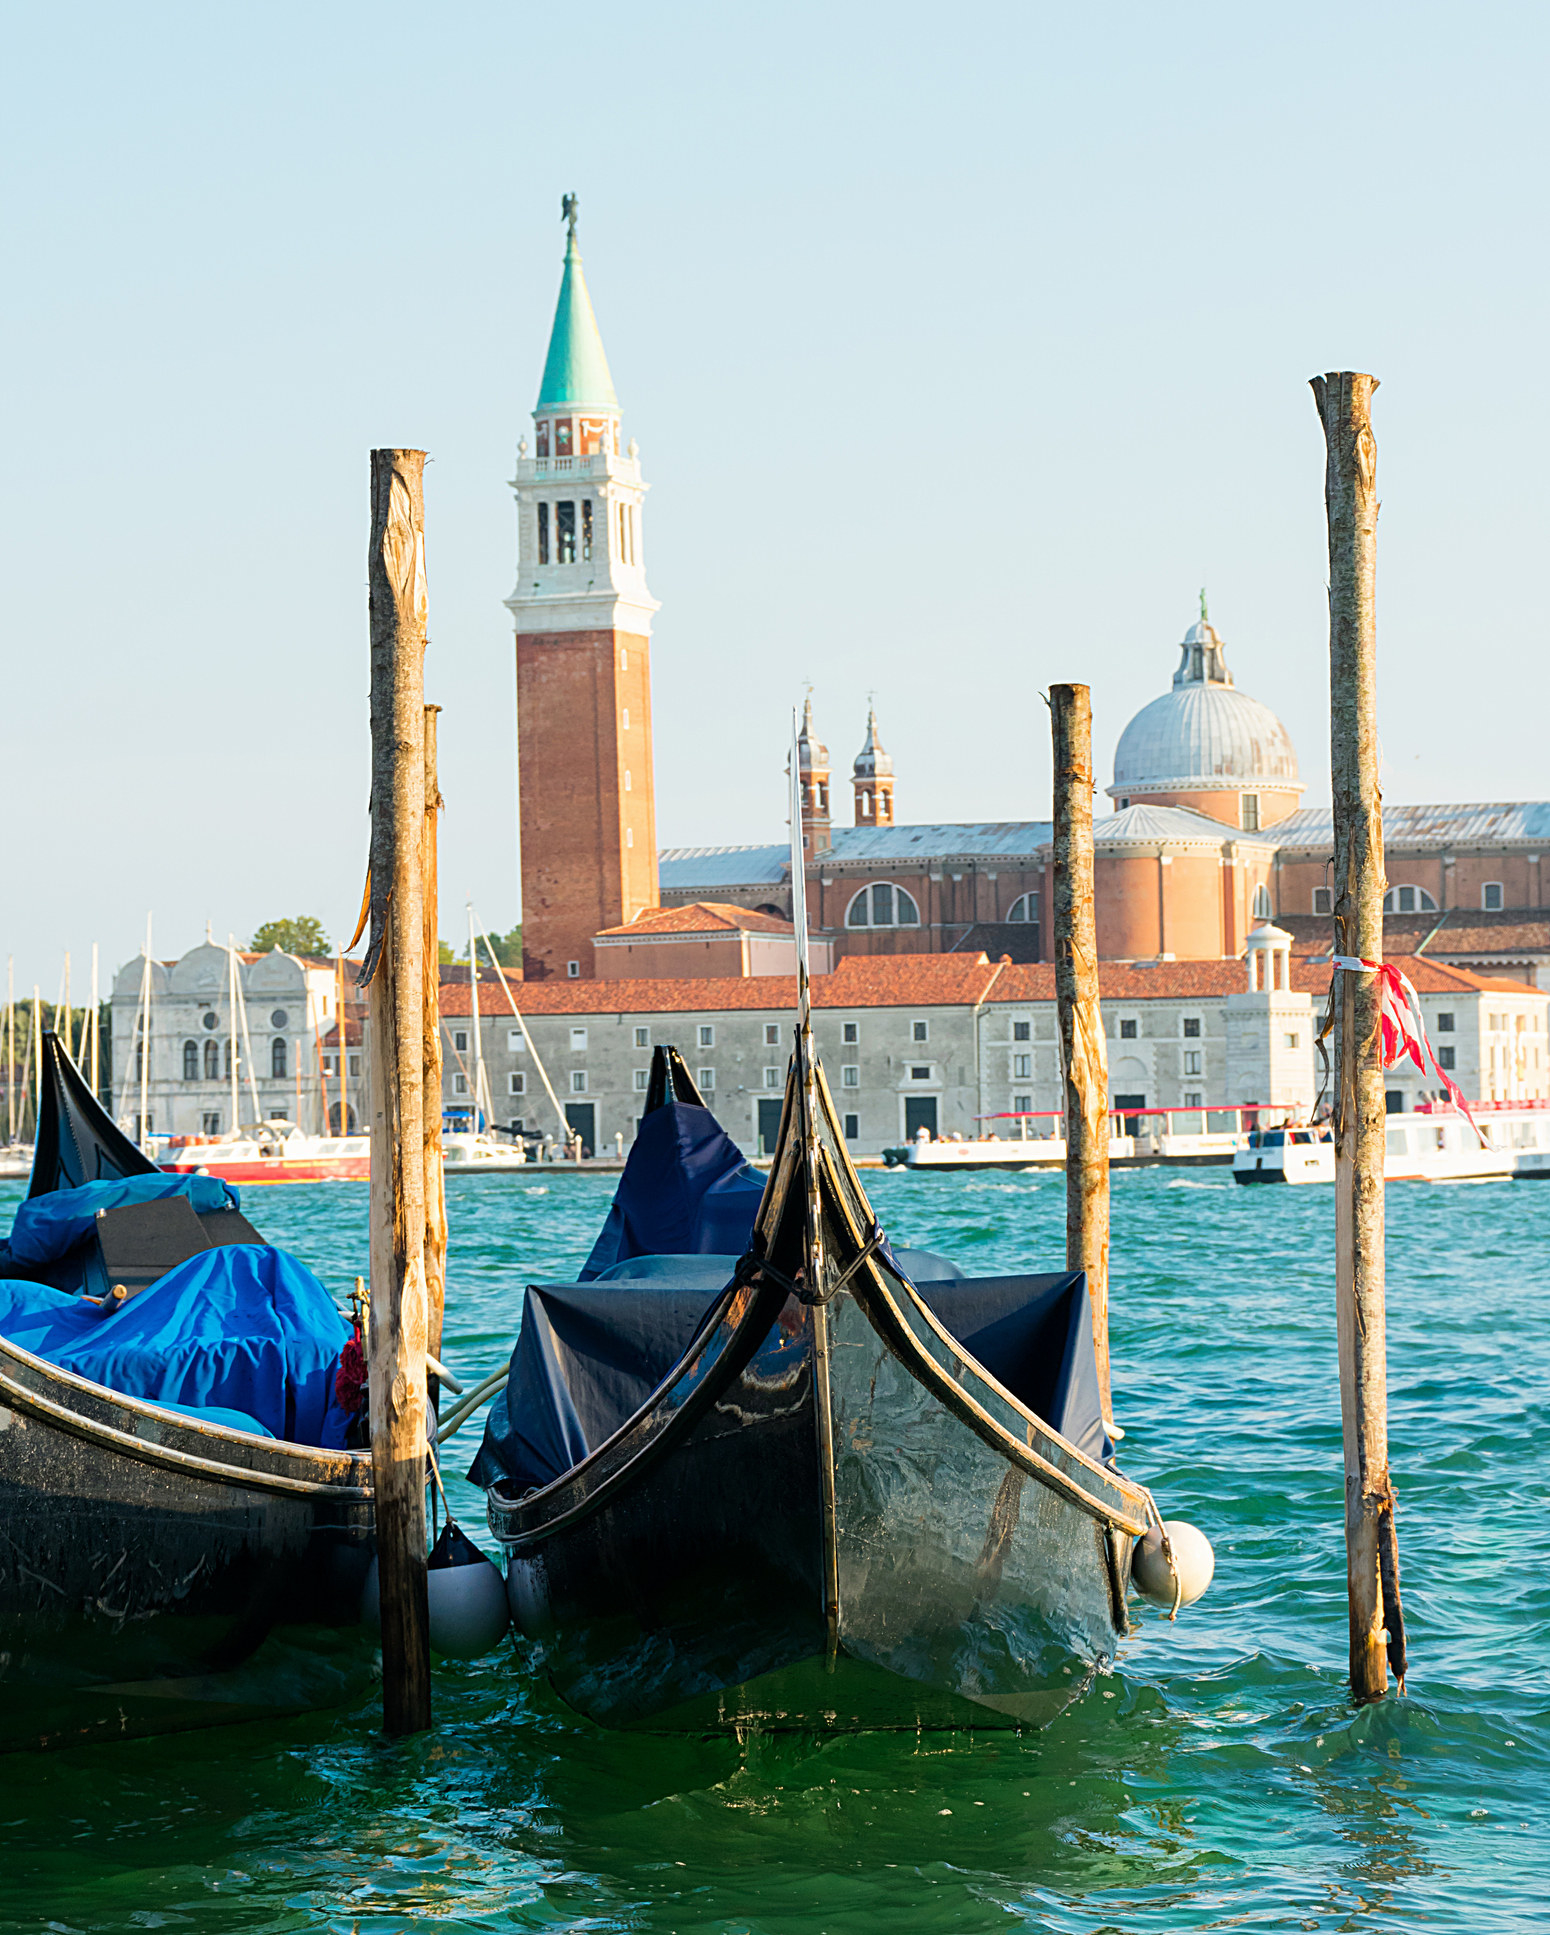 Gondolas in the canal in Venice.